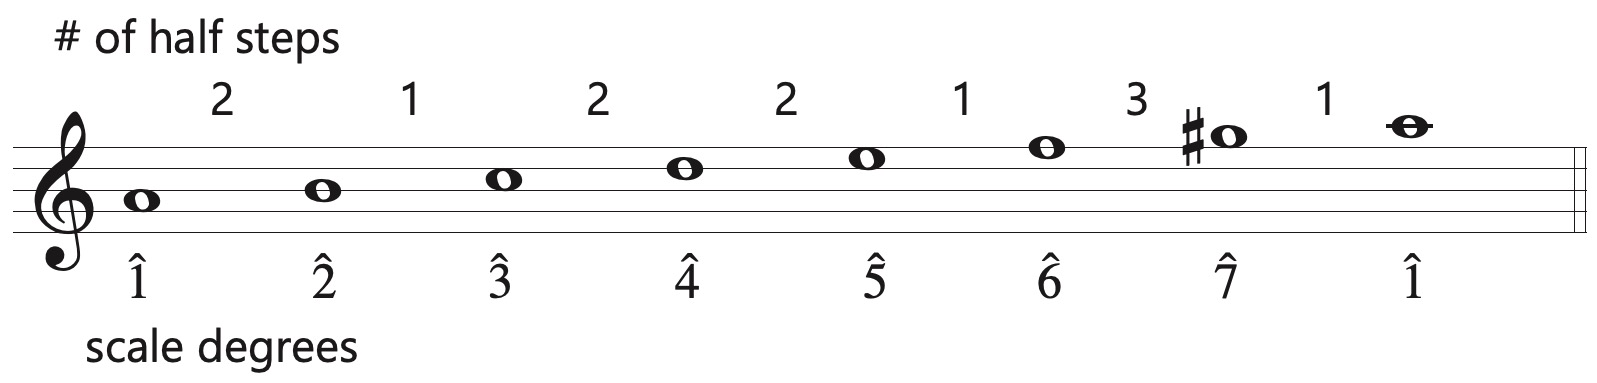 a harmonic minor scale